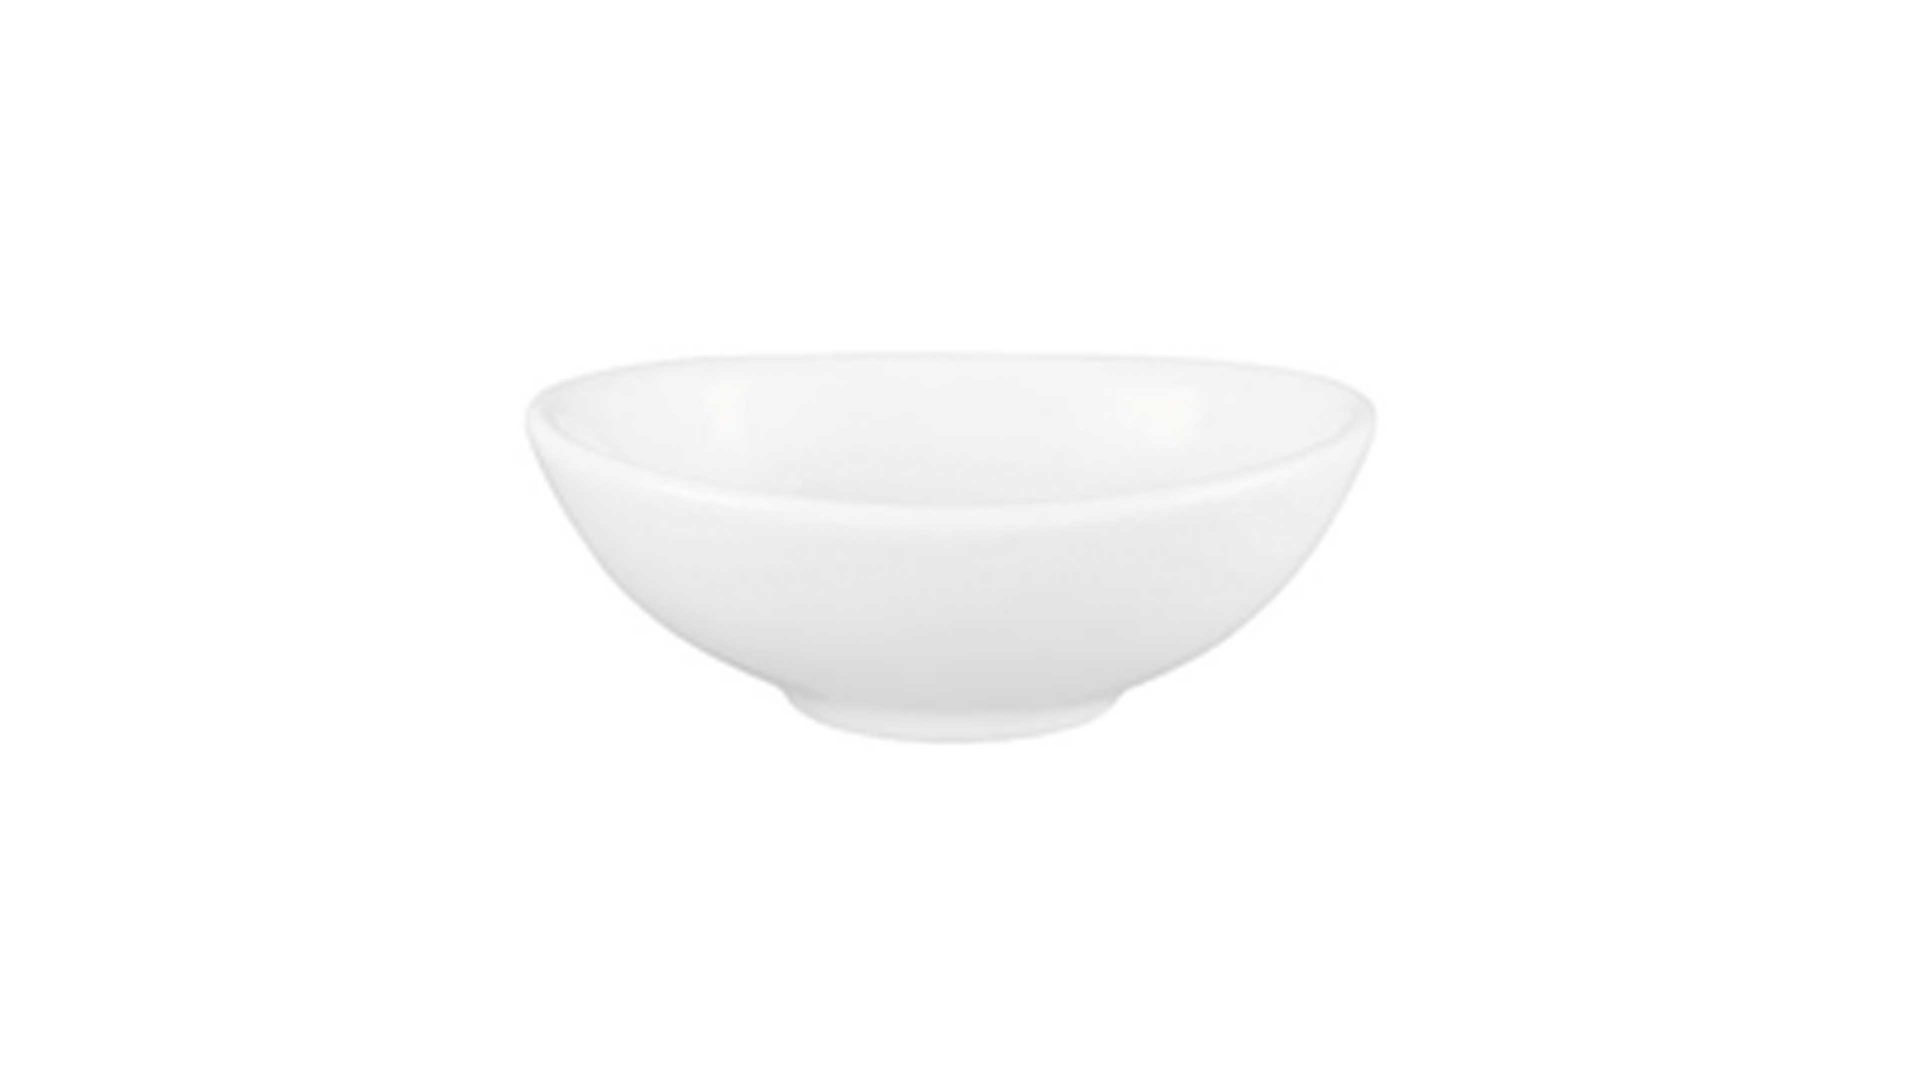 Schüssel Seltmann aus Porzellan in Weiß Seltmann Porzellanserie Modern Life 6 – Bowl weißes Porzellan – Durchmesser ca. 9 cm